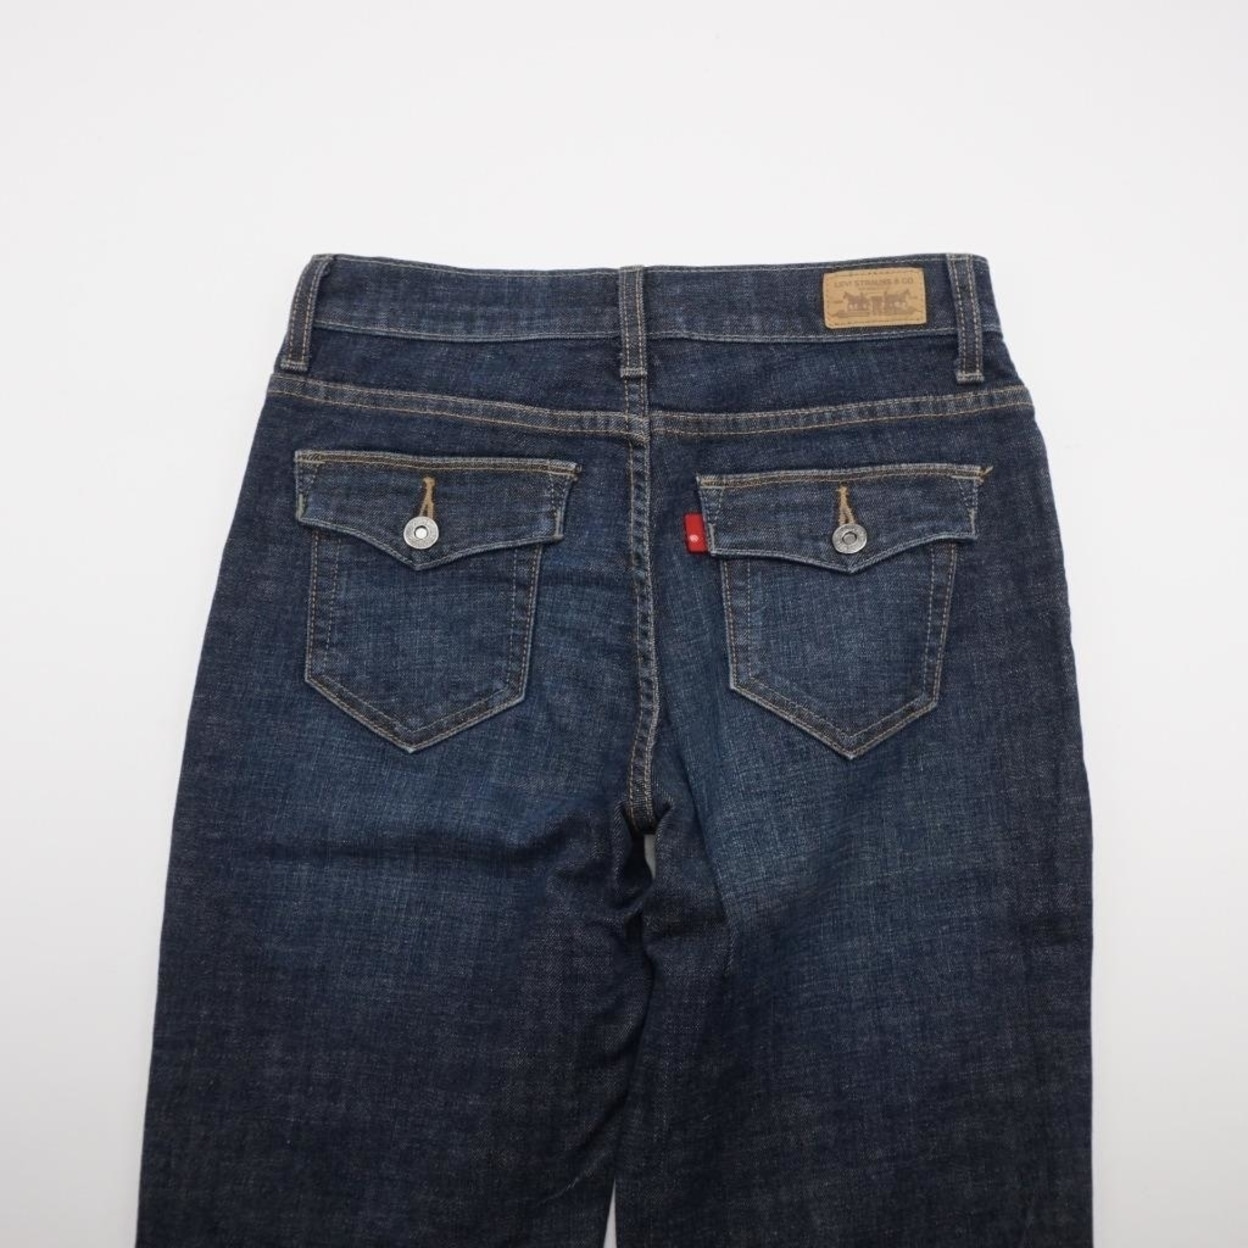 Levi Strauss 512 Jeans Online, SAVE 50% 